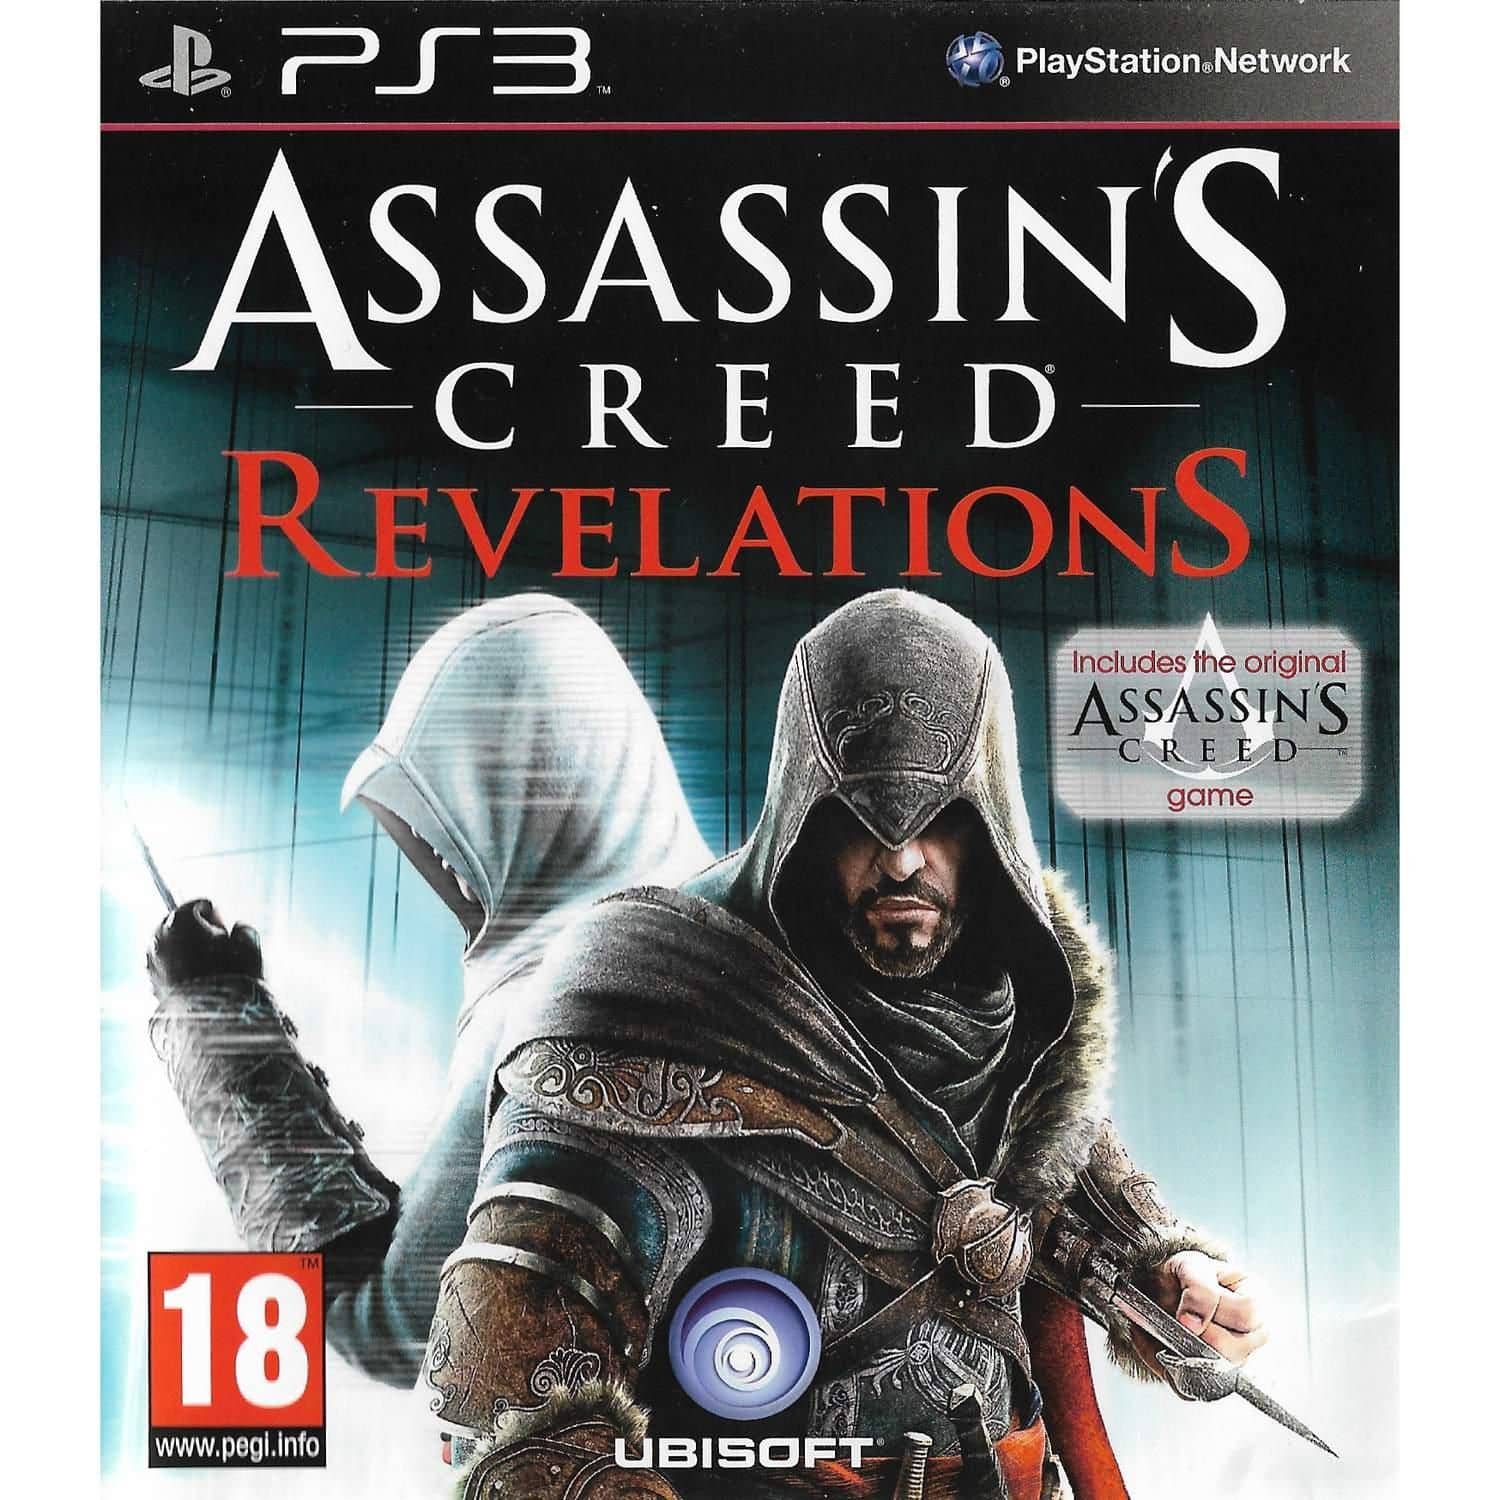 Assassins Creed Revelations Playstation 3 PS3 (Begagnad)